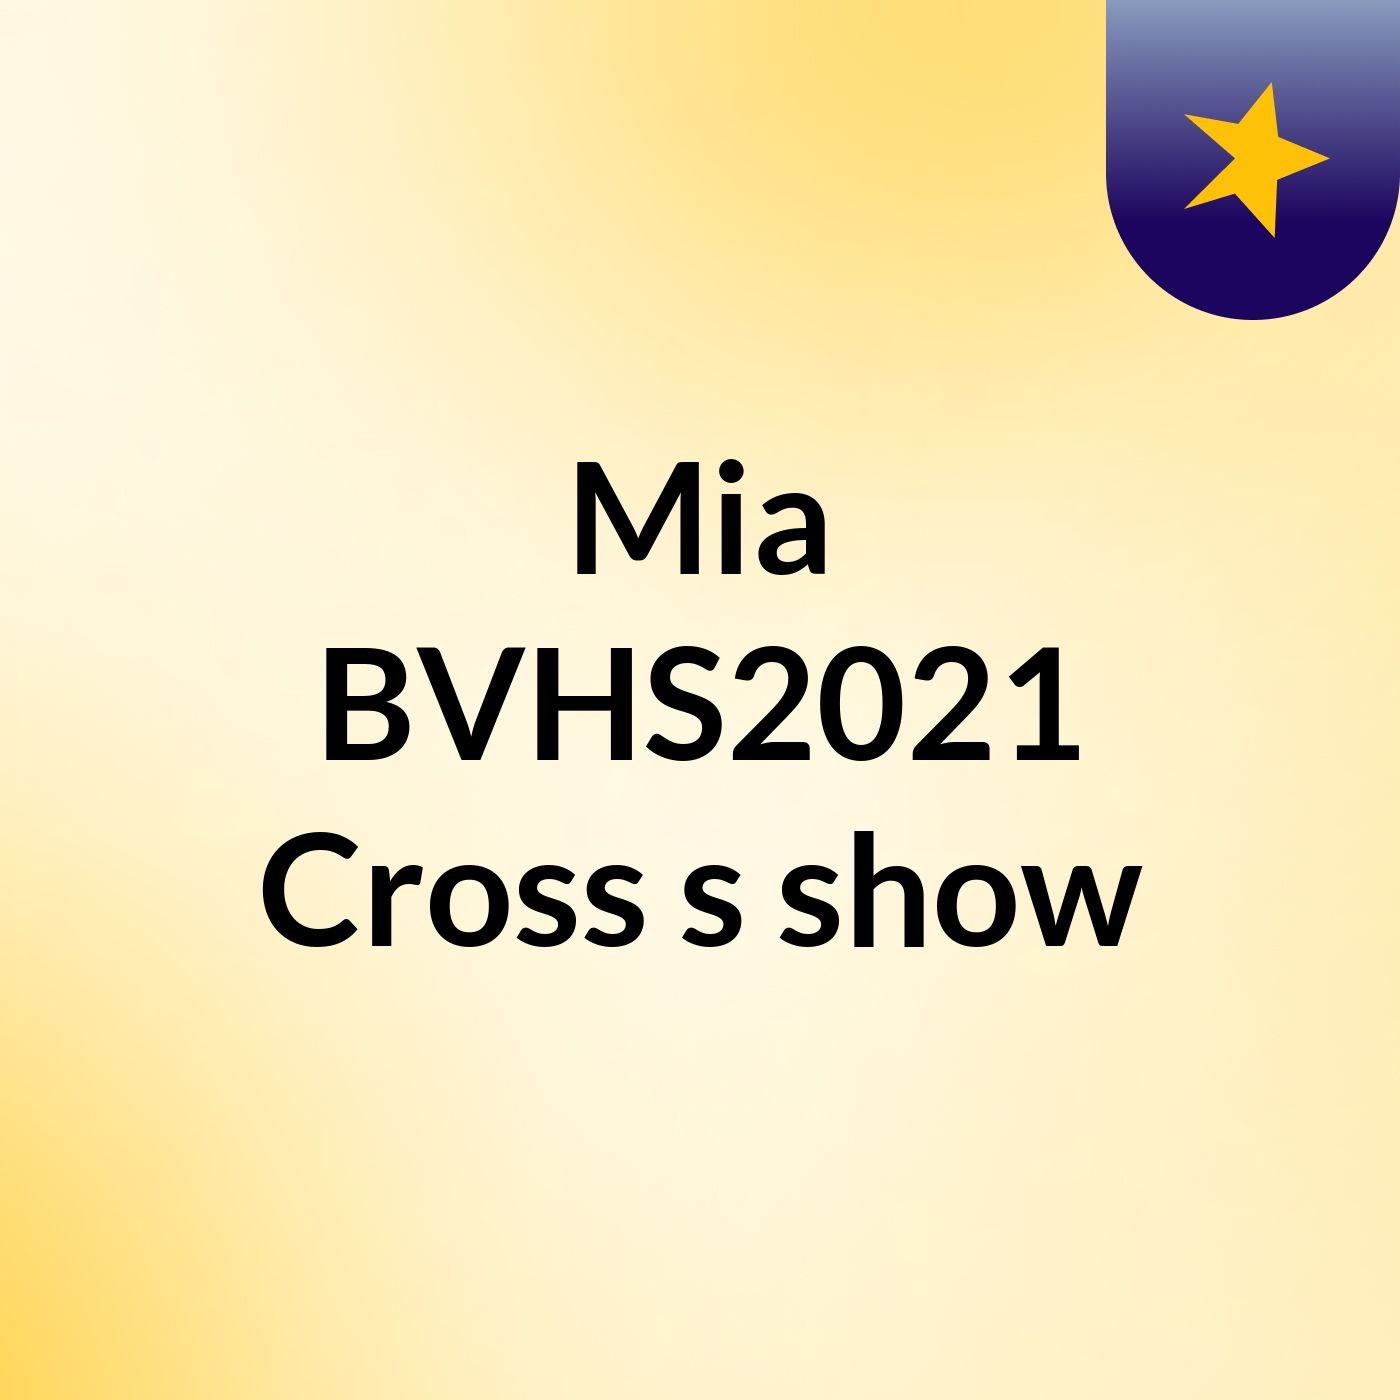 Mia BVHS2021 Cross's show